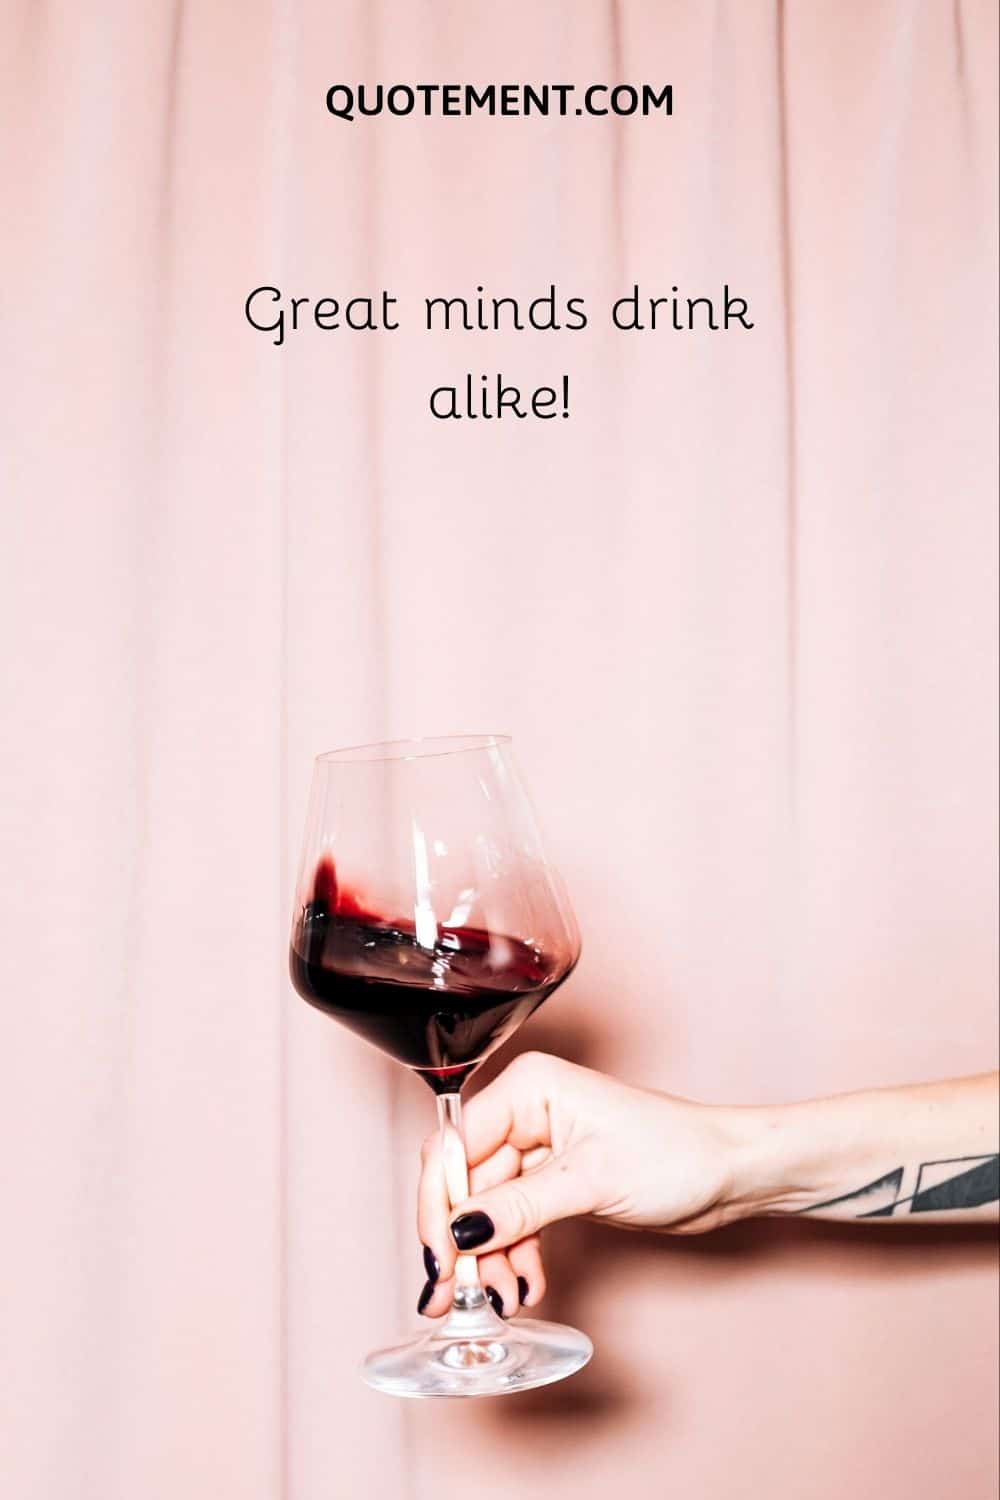 Great minds drink alike